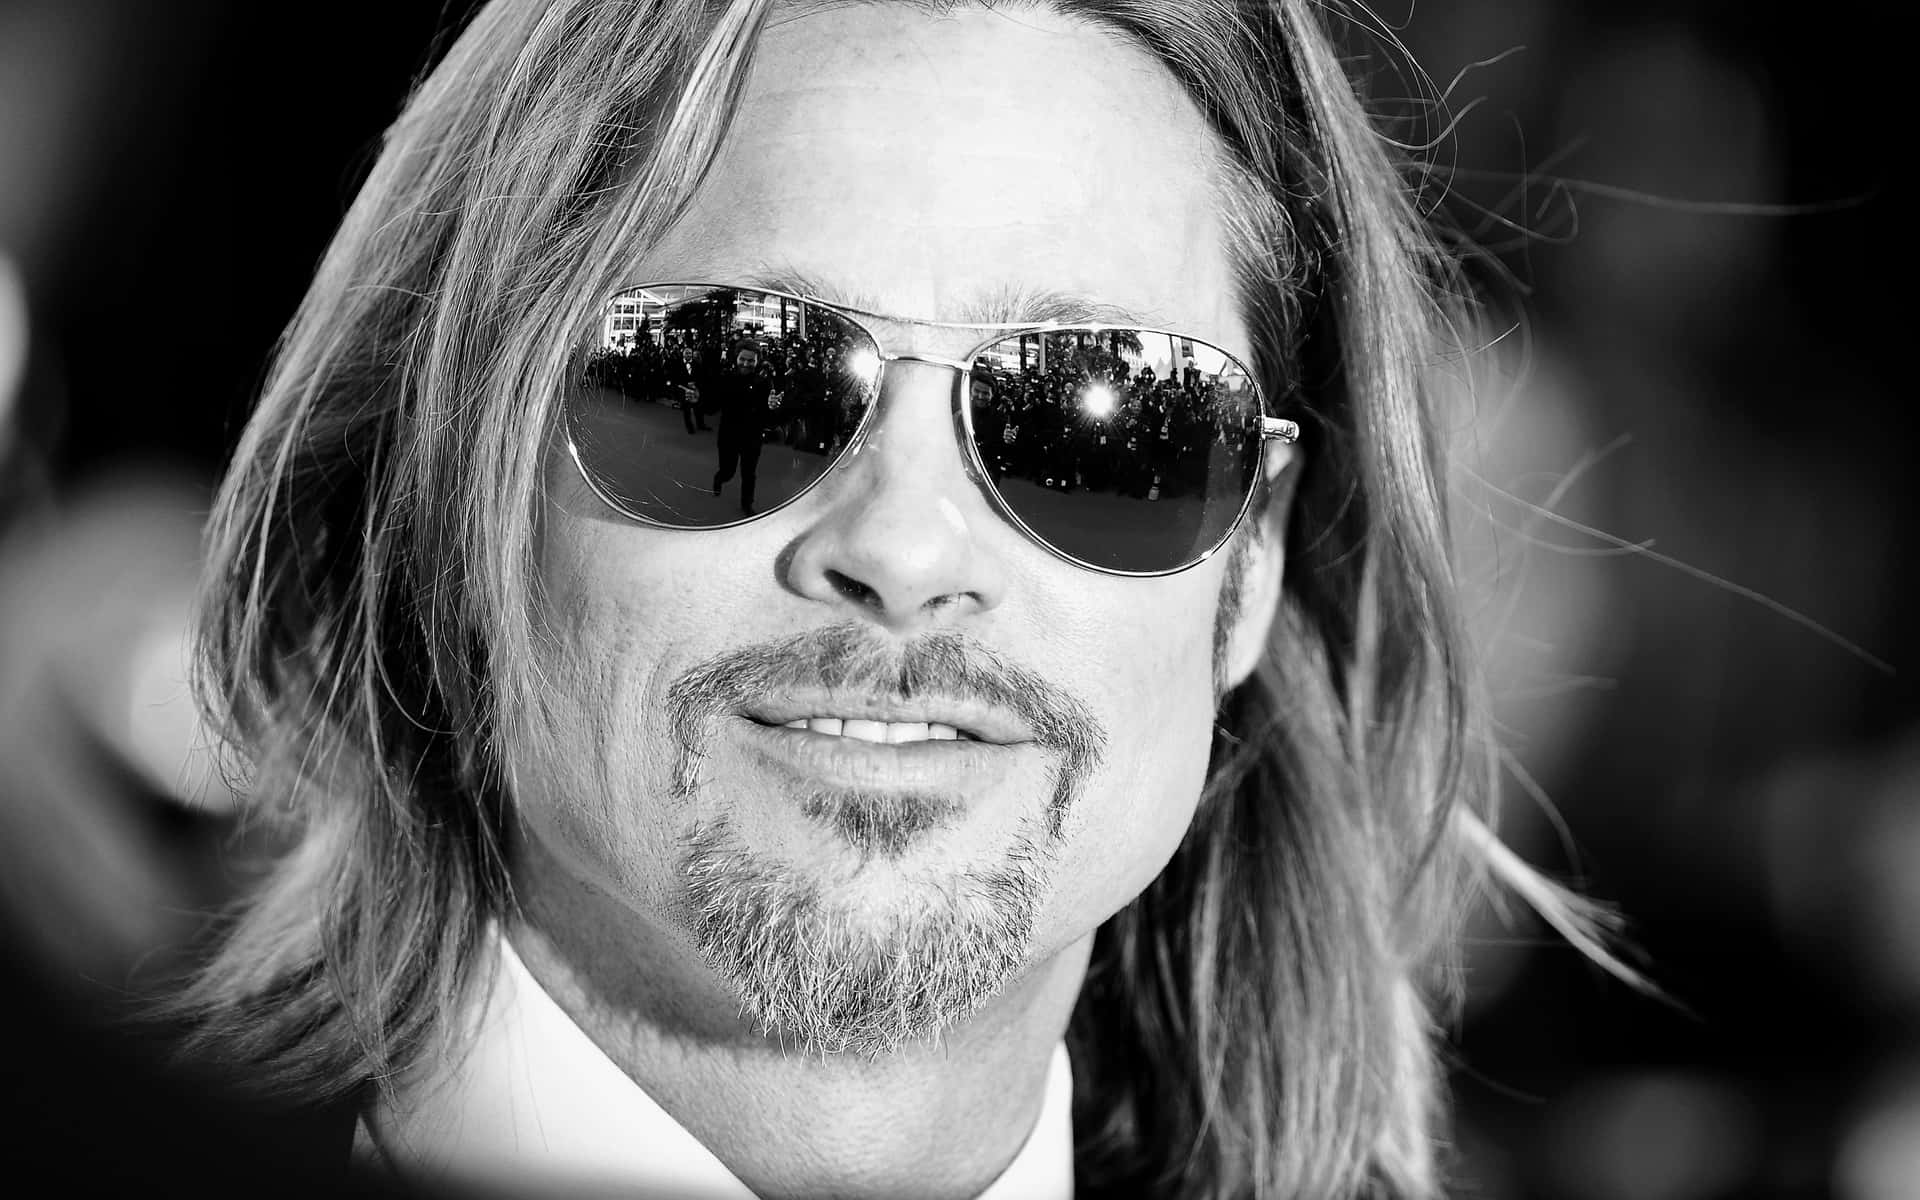 Traductorde Google: Actor Brad Pitt